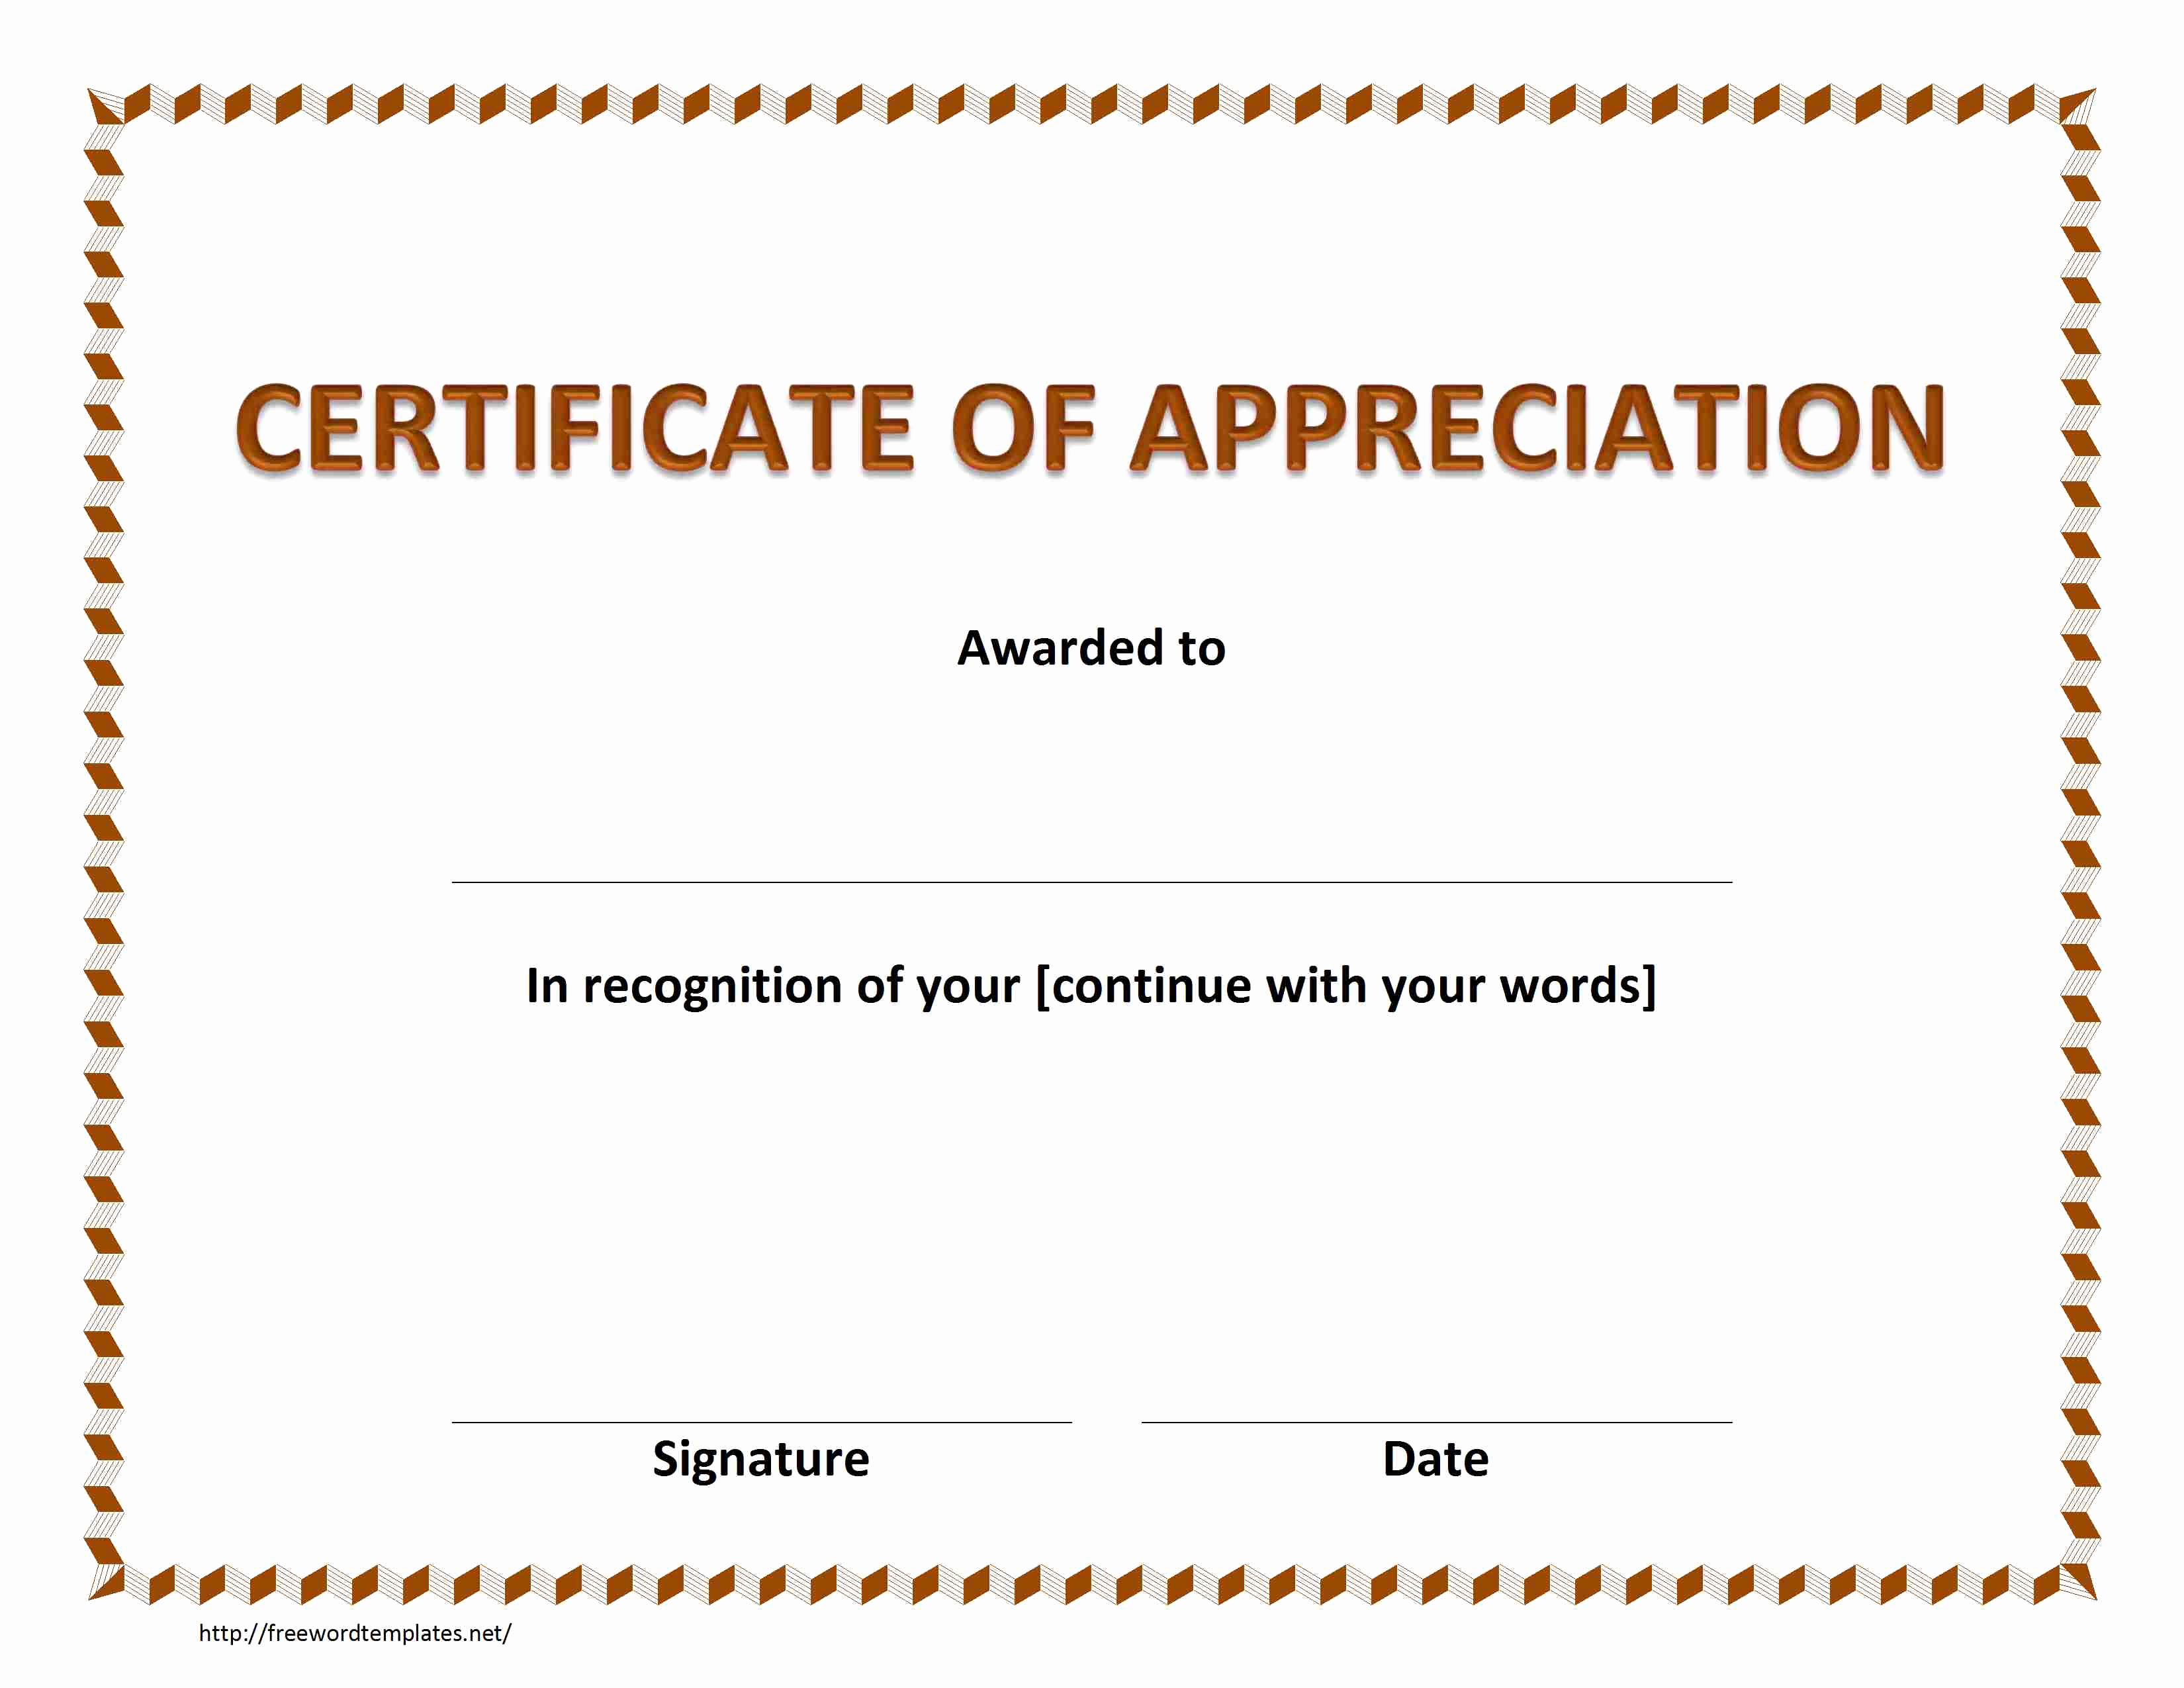 Certificate Of Appreciation Template Free Lovely Certificate Of Appreciation